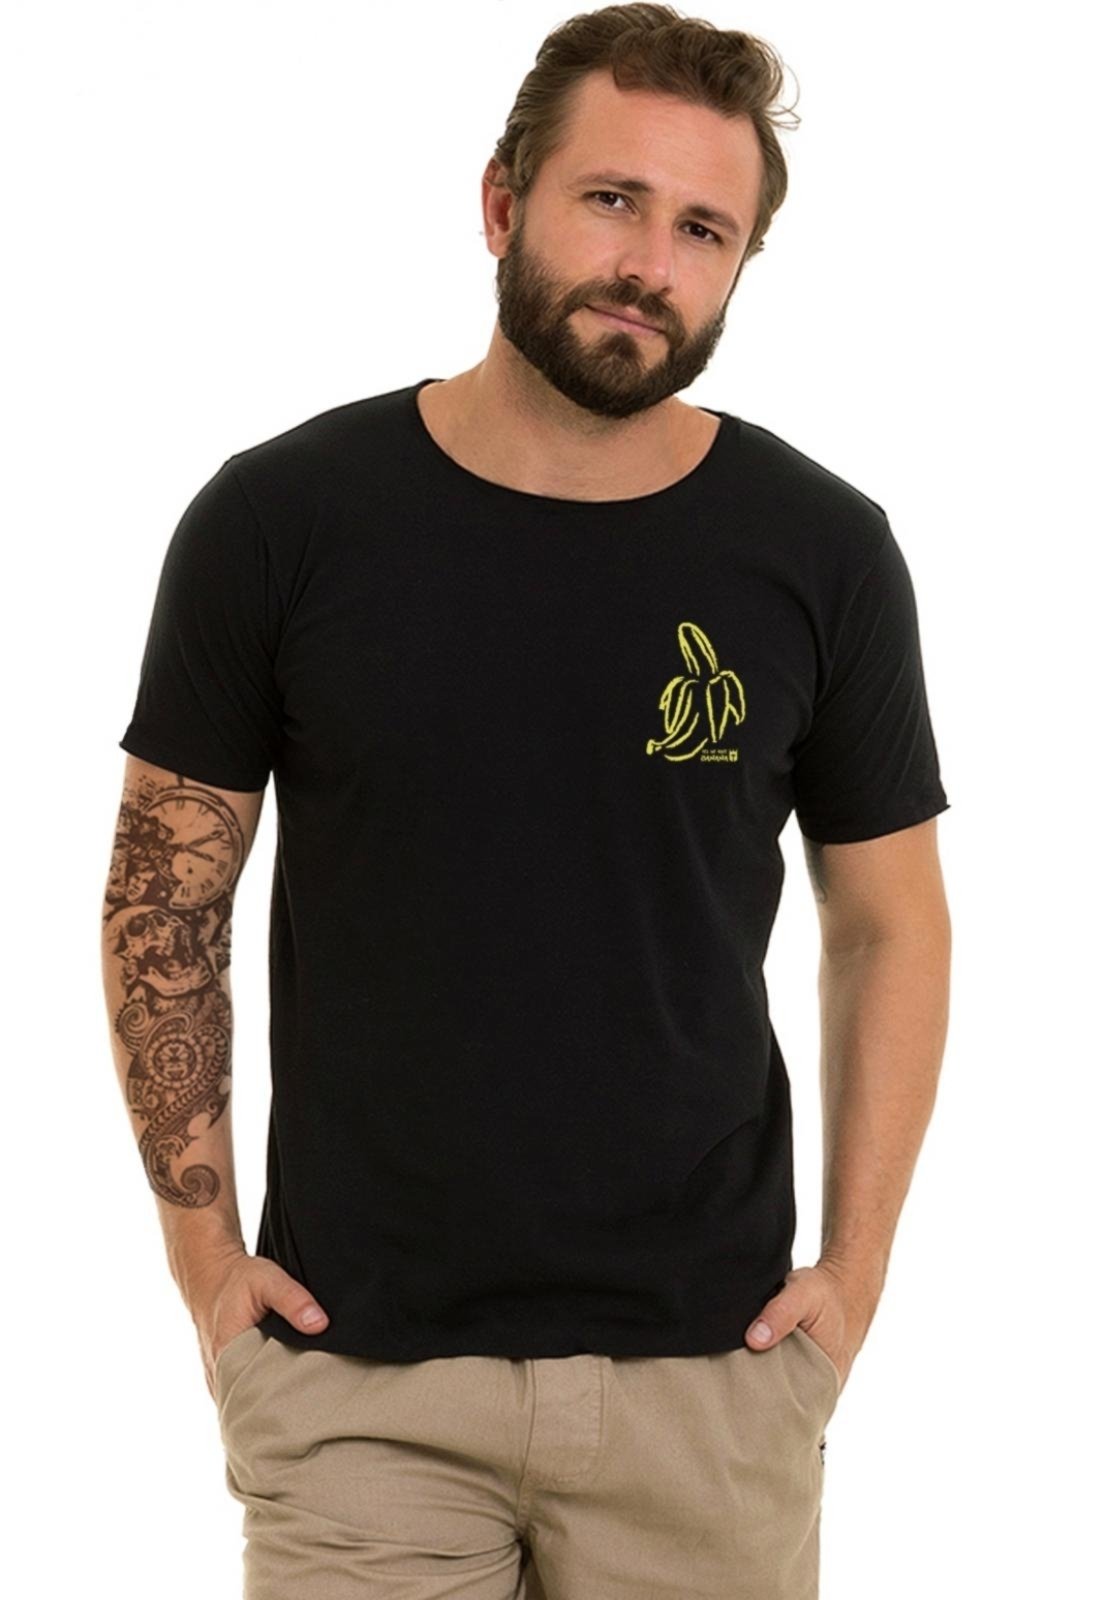 Joss-Camiseta-Corte--C3-A0-Fio-Joss-Logo-Banana-Preta-4792-3327026-1-zoom